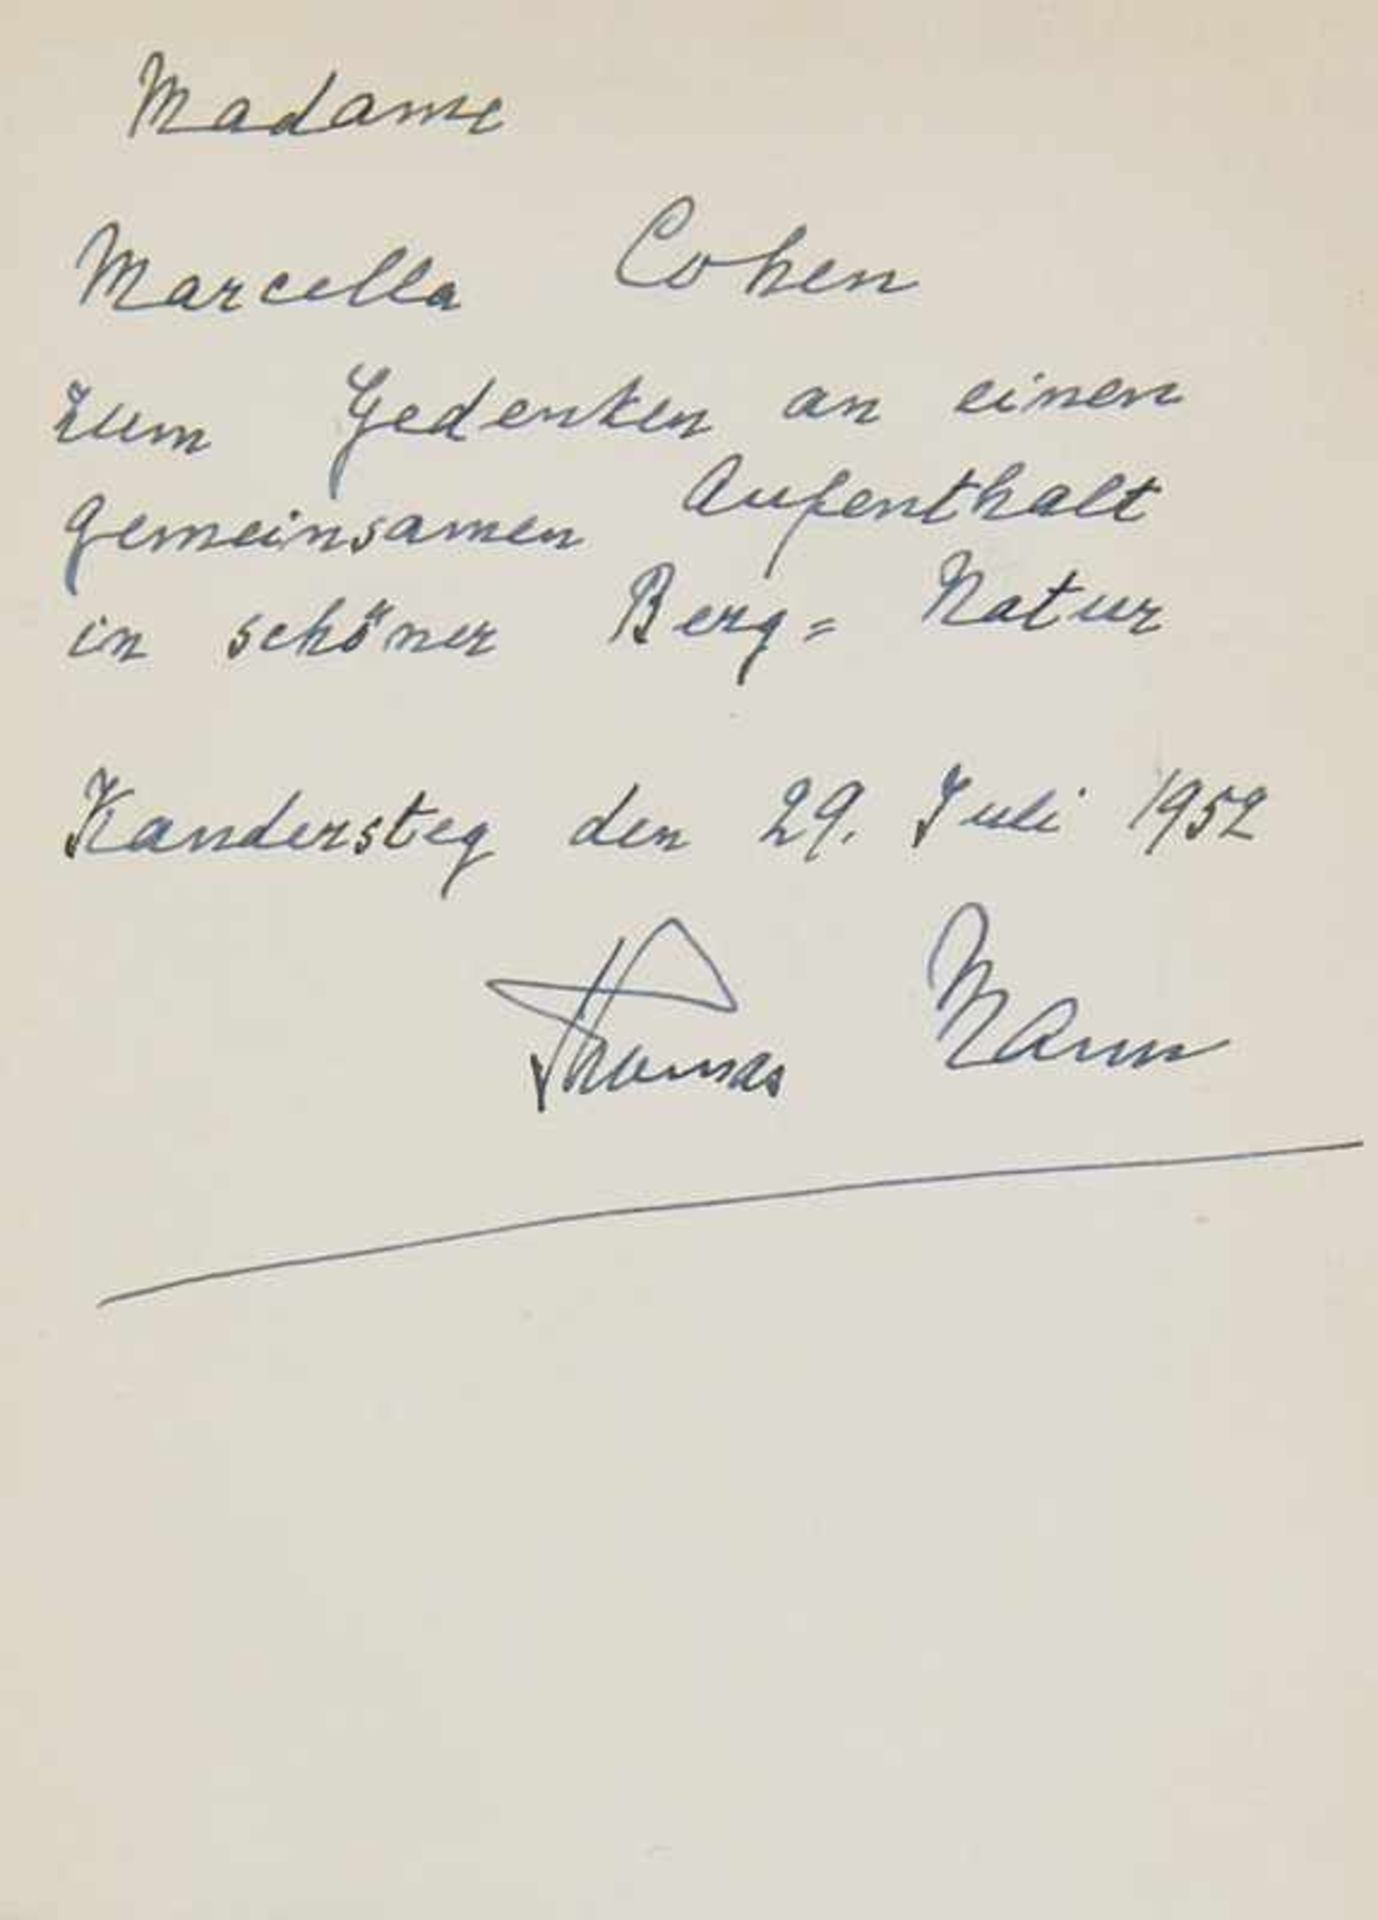 Man, Thomas Personal dedication with signature. Kandersteg, 29 July 1952. 1 sheet. (approx. 15 x